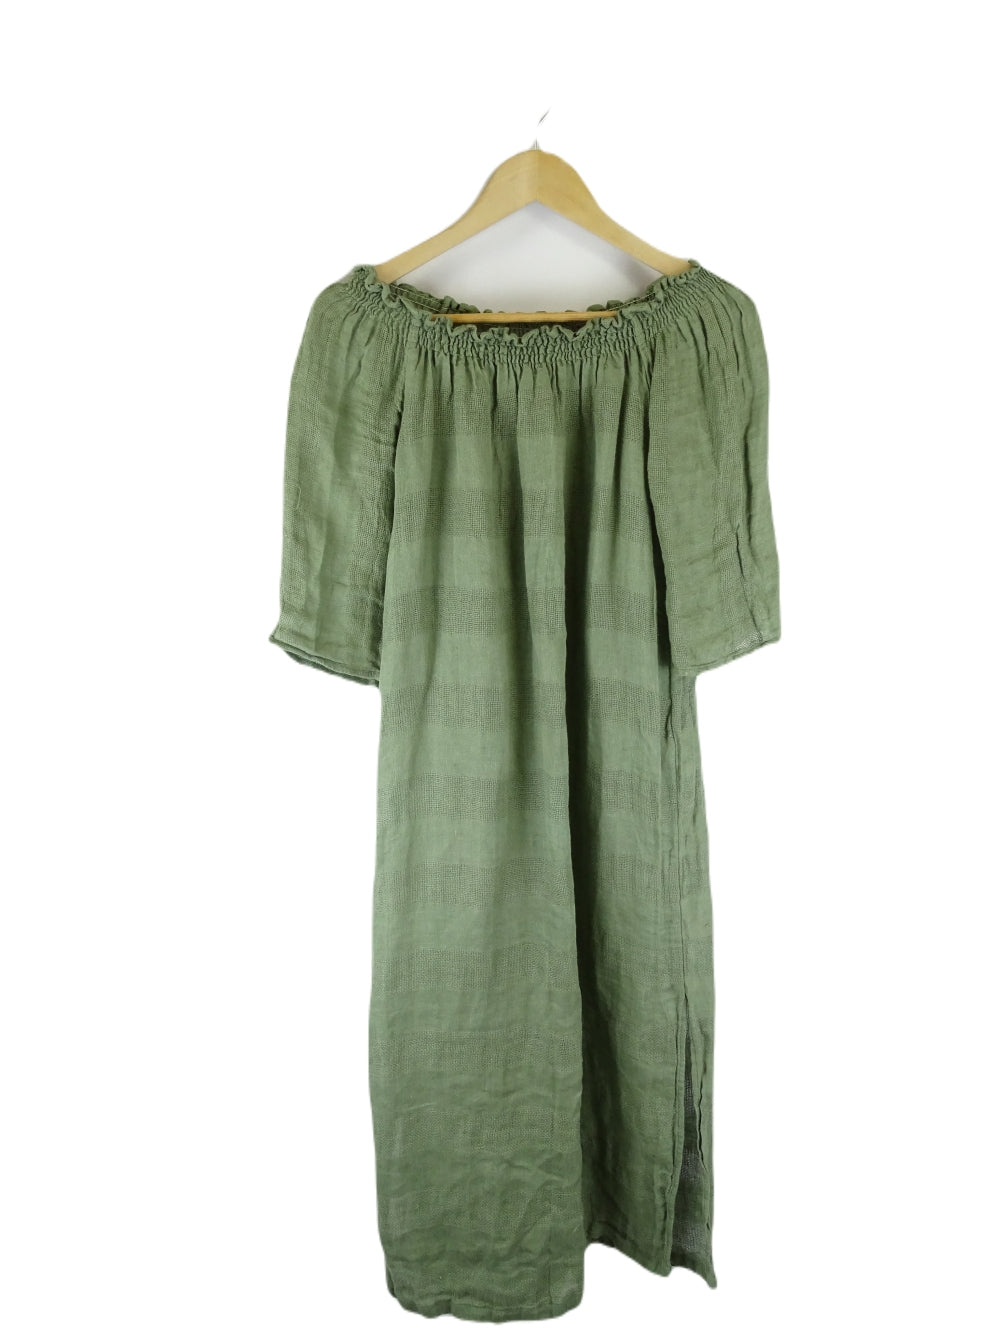 Georquie A Green Dress S